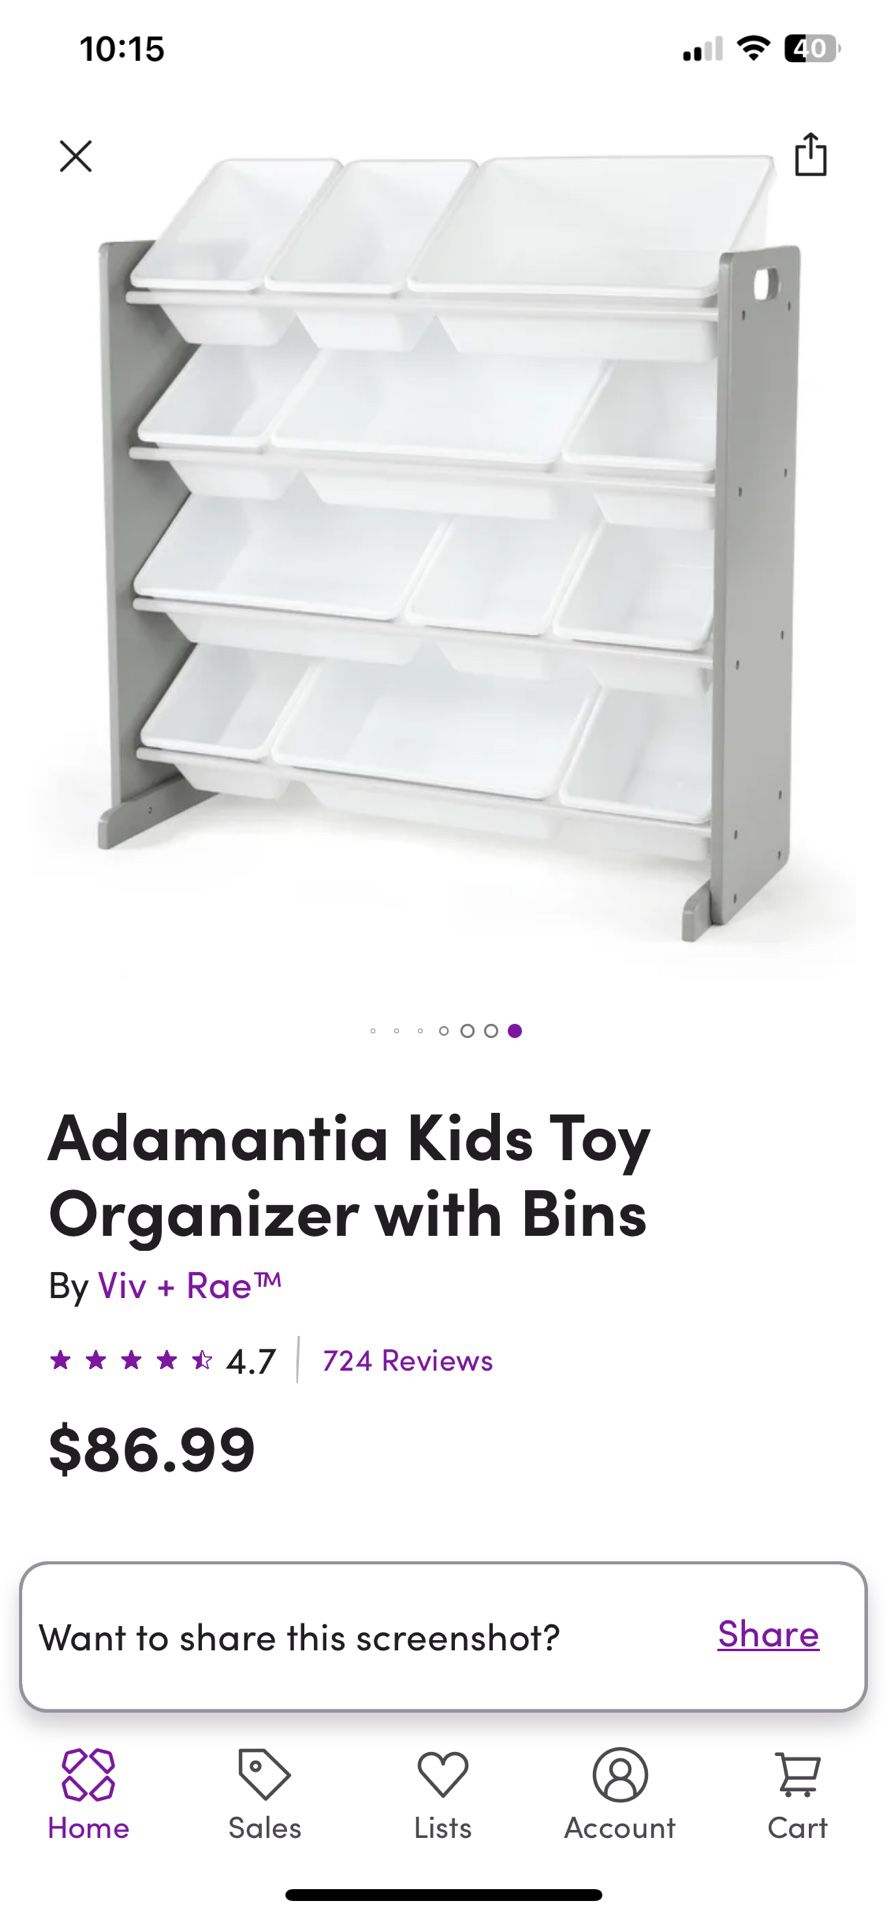 16 Bin Toy Organizer